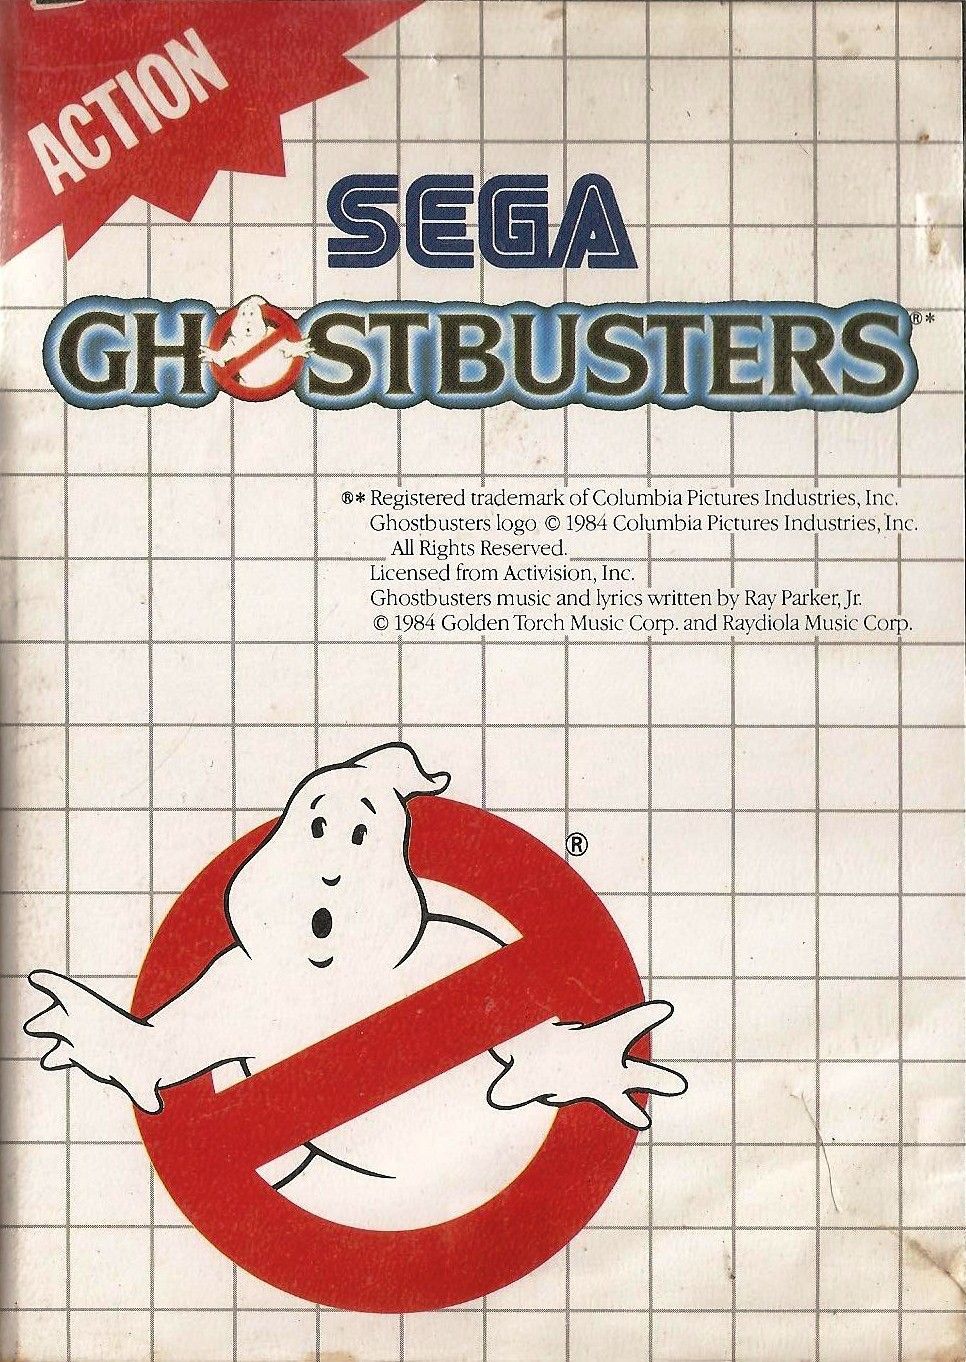 Ghostbusters - SEGA Master System - 1989